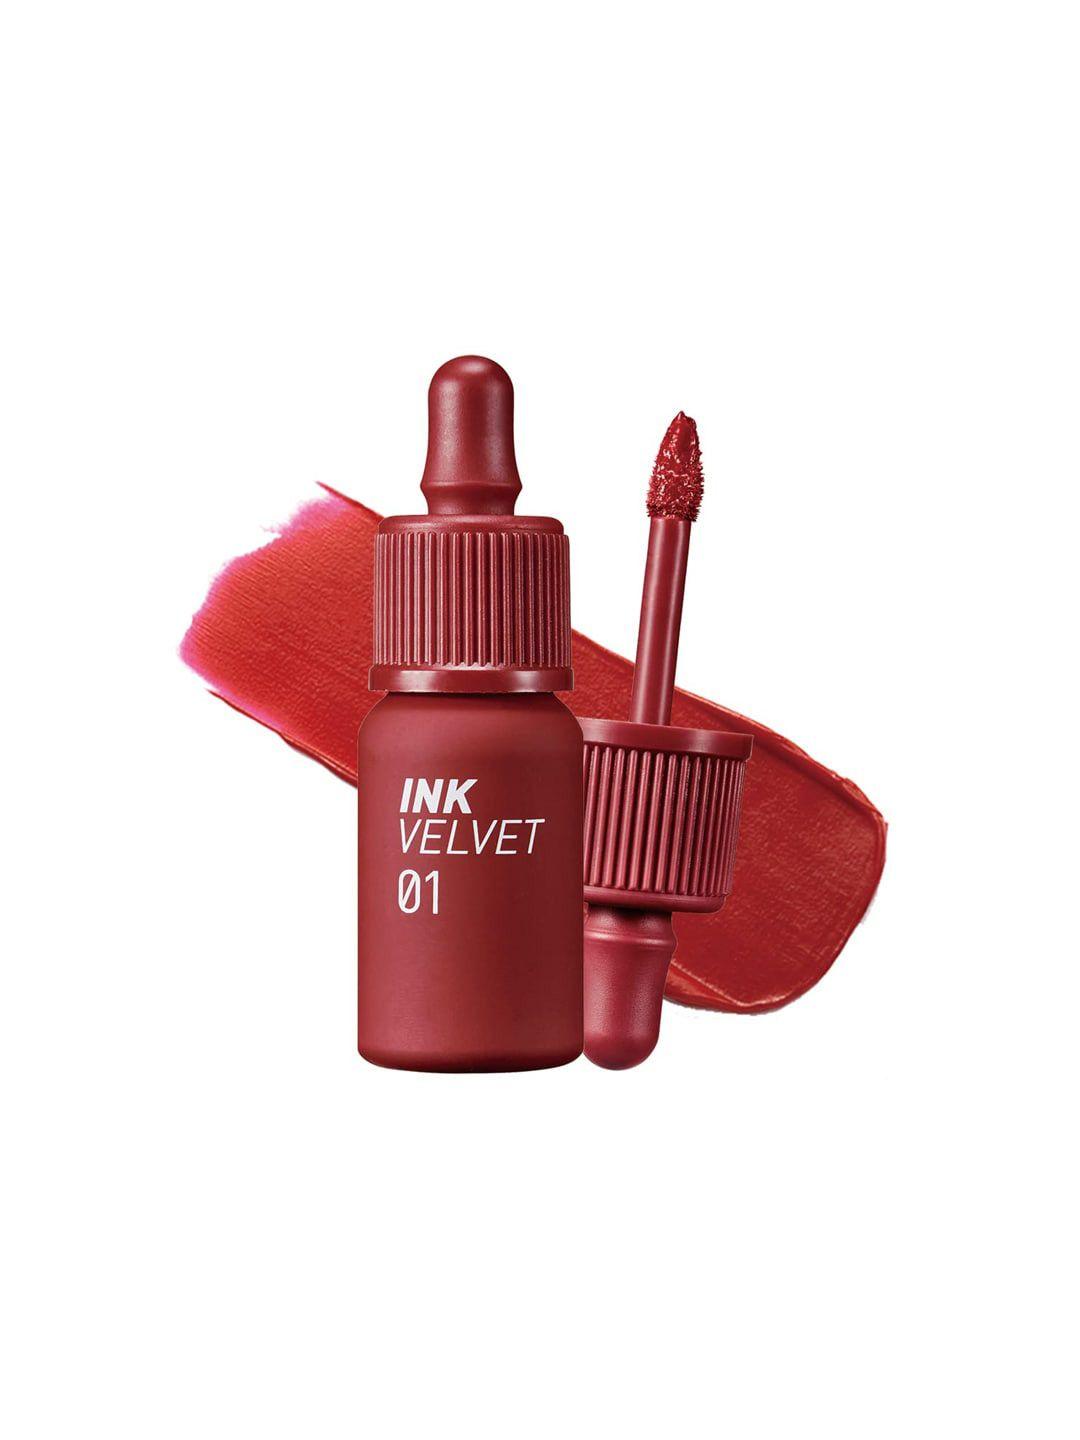 peripera-ink-velvet-long-lasting-lipstick-good-brick-01